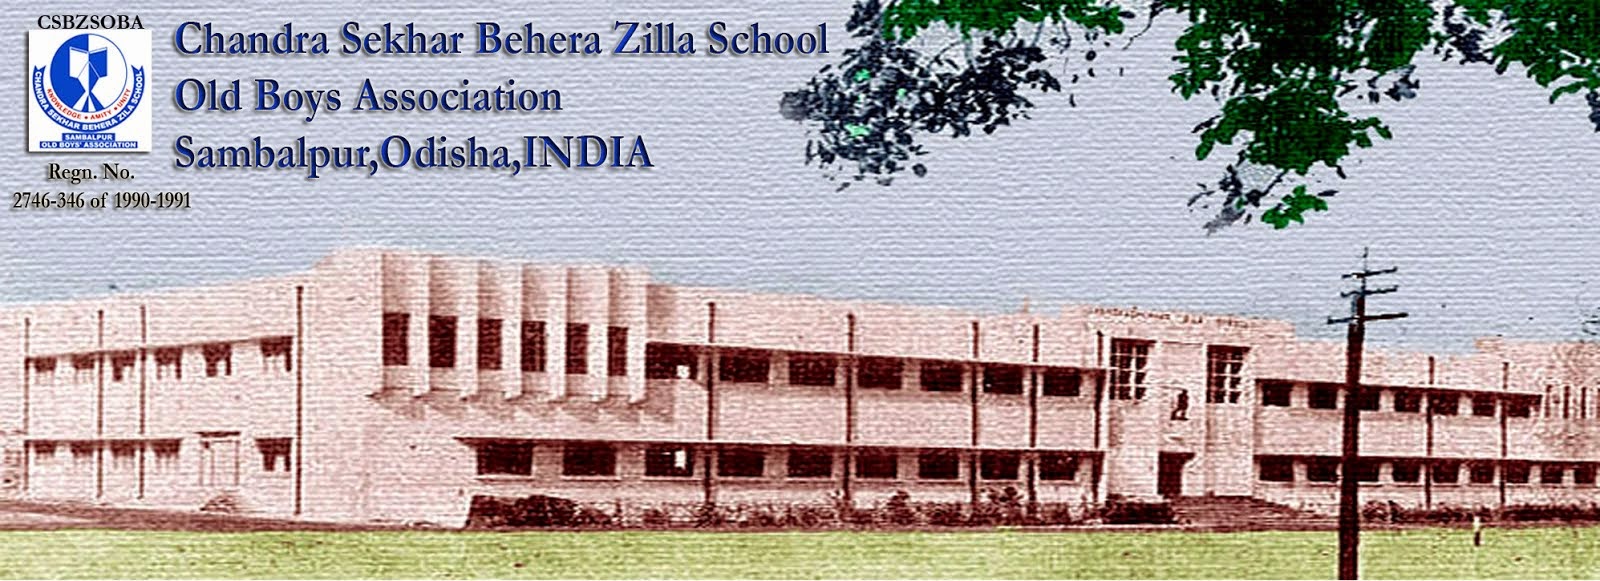 C.S.B.ZILLA SCHOOL, Sambalpur.odisha (india)